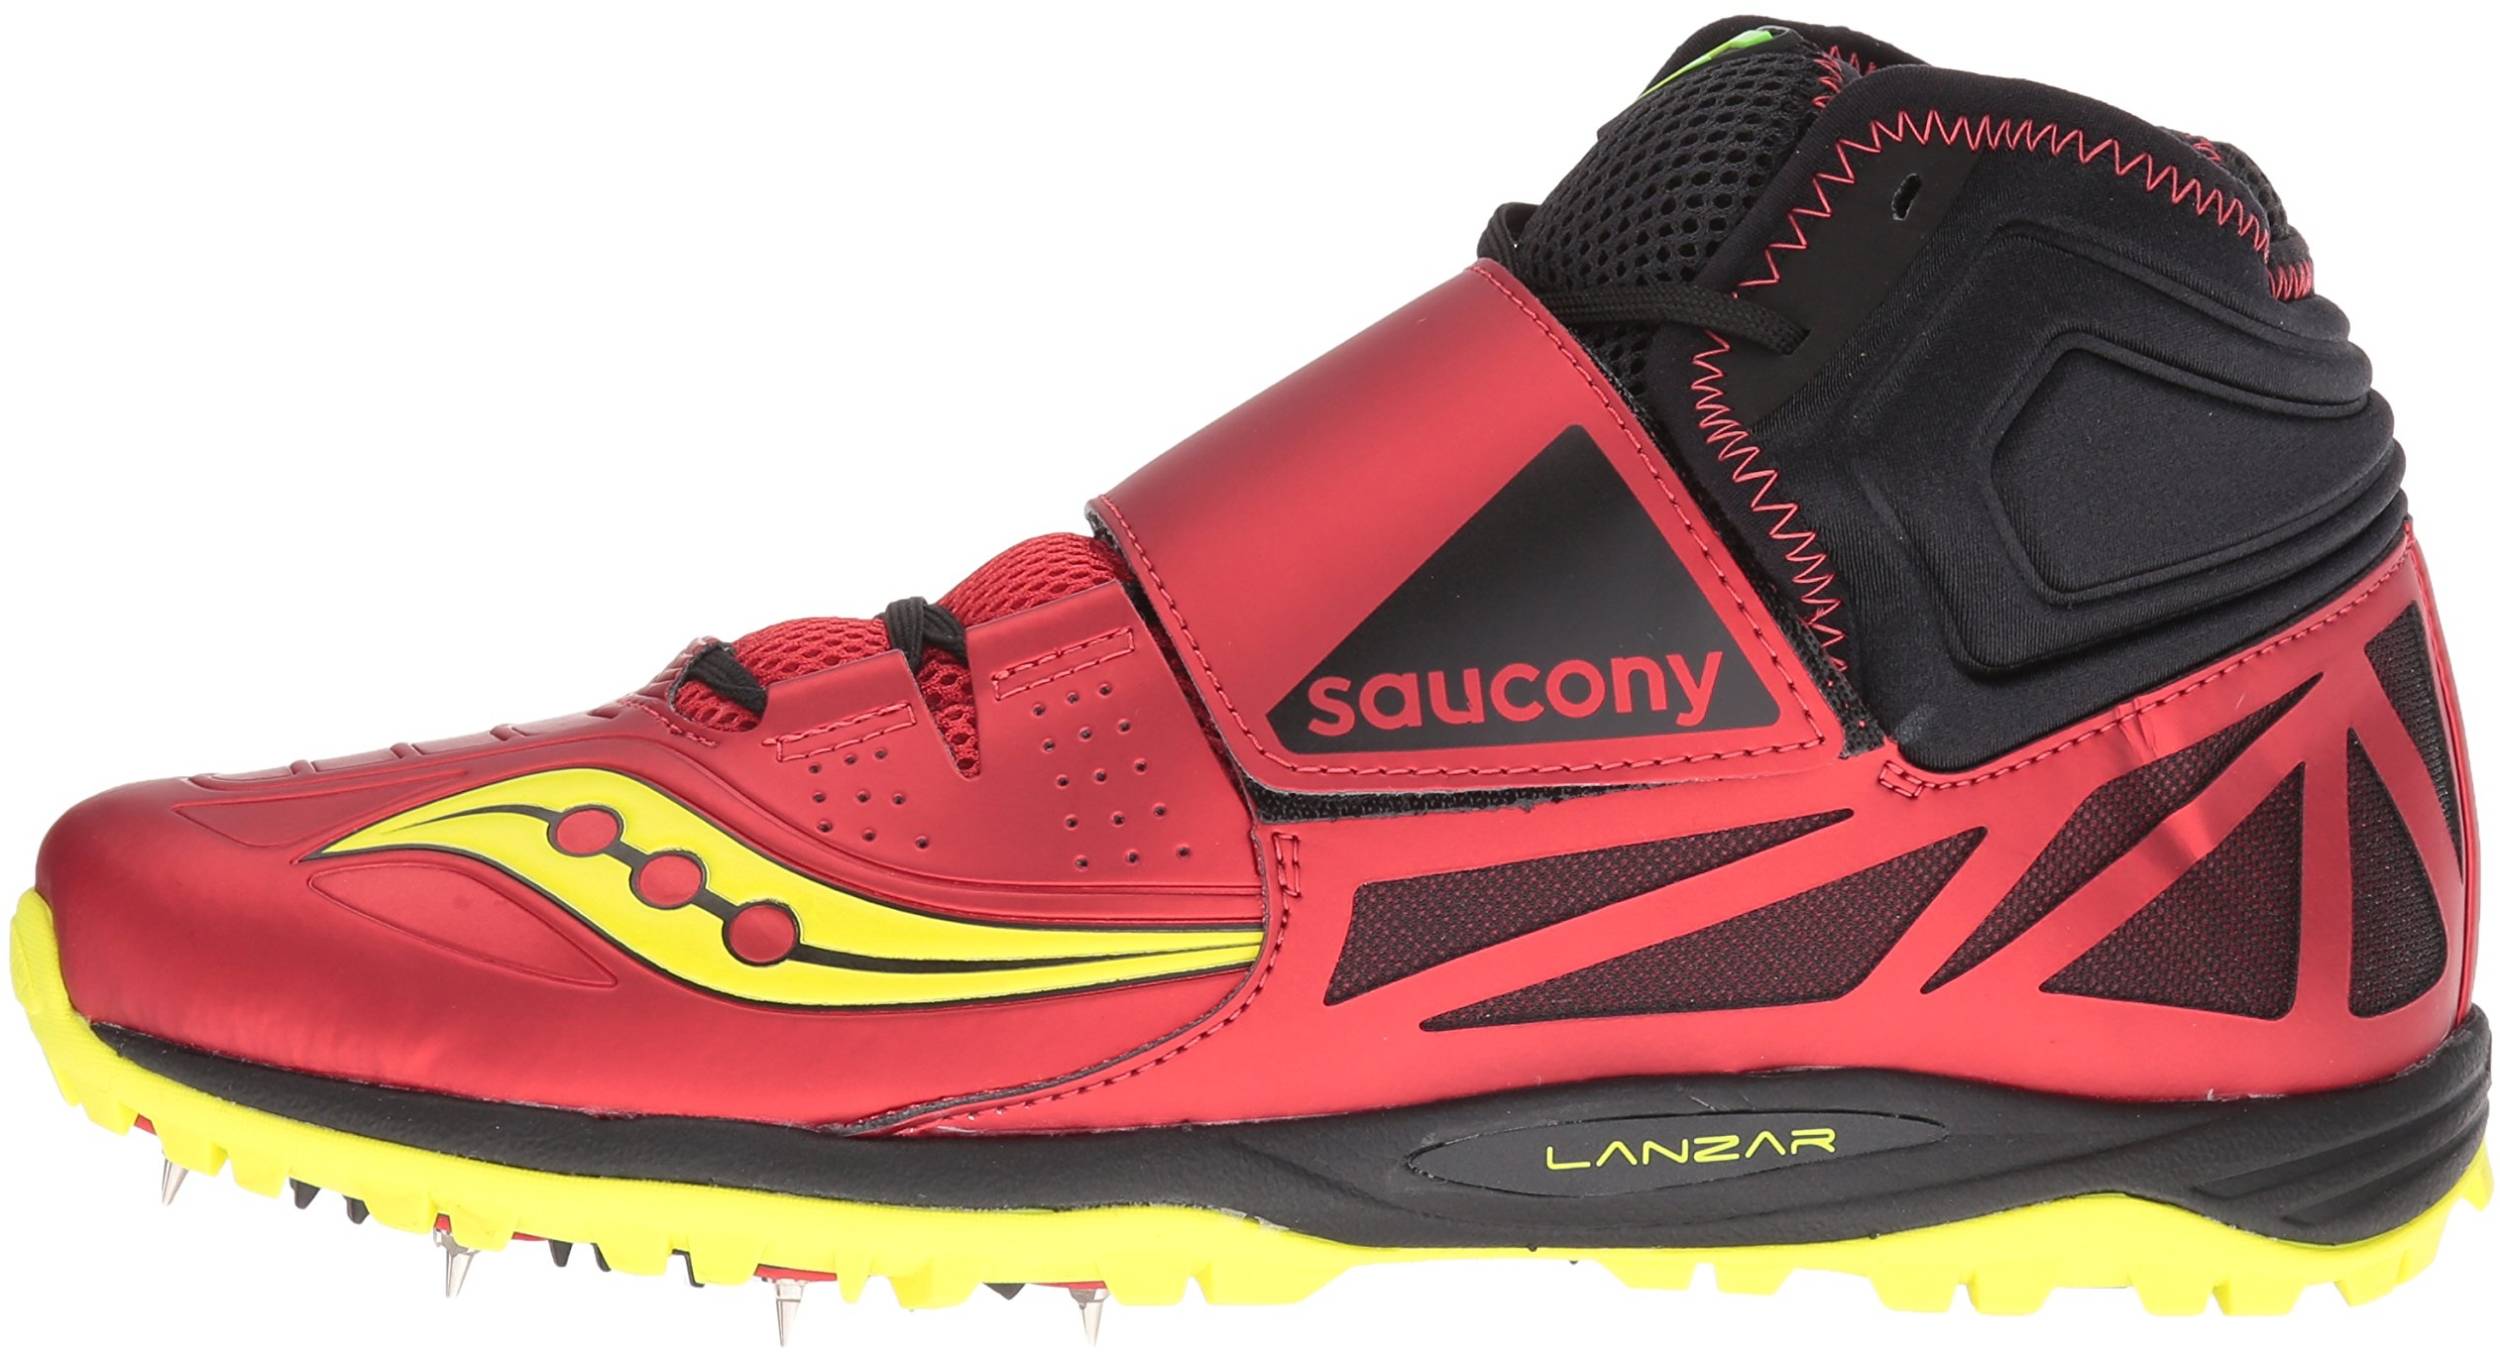 Save 79% on Saucony Track \u0026 Field Shoes 